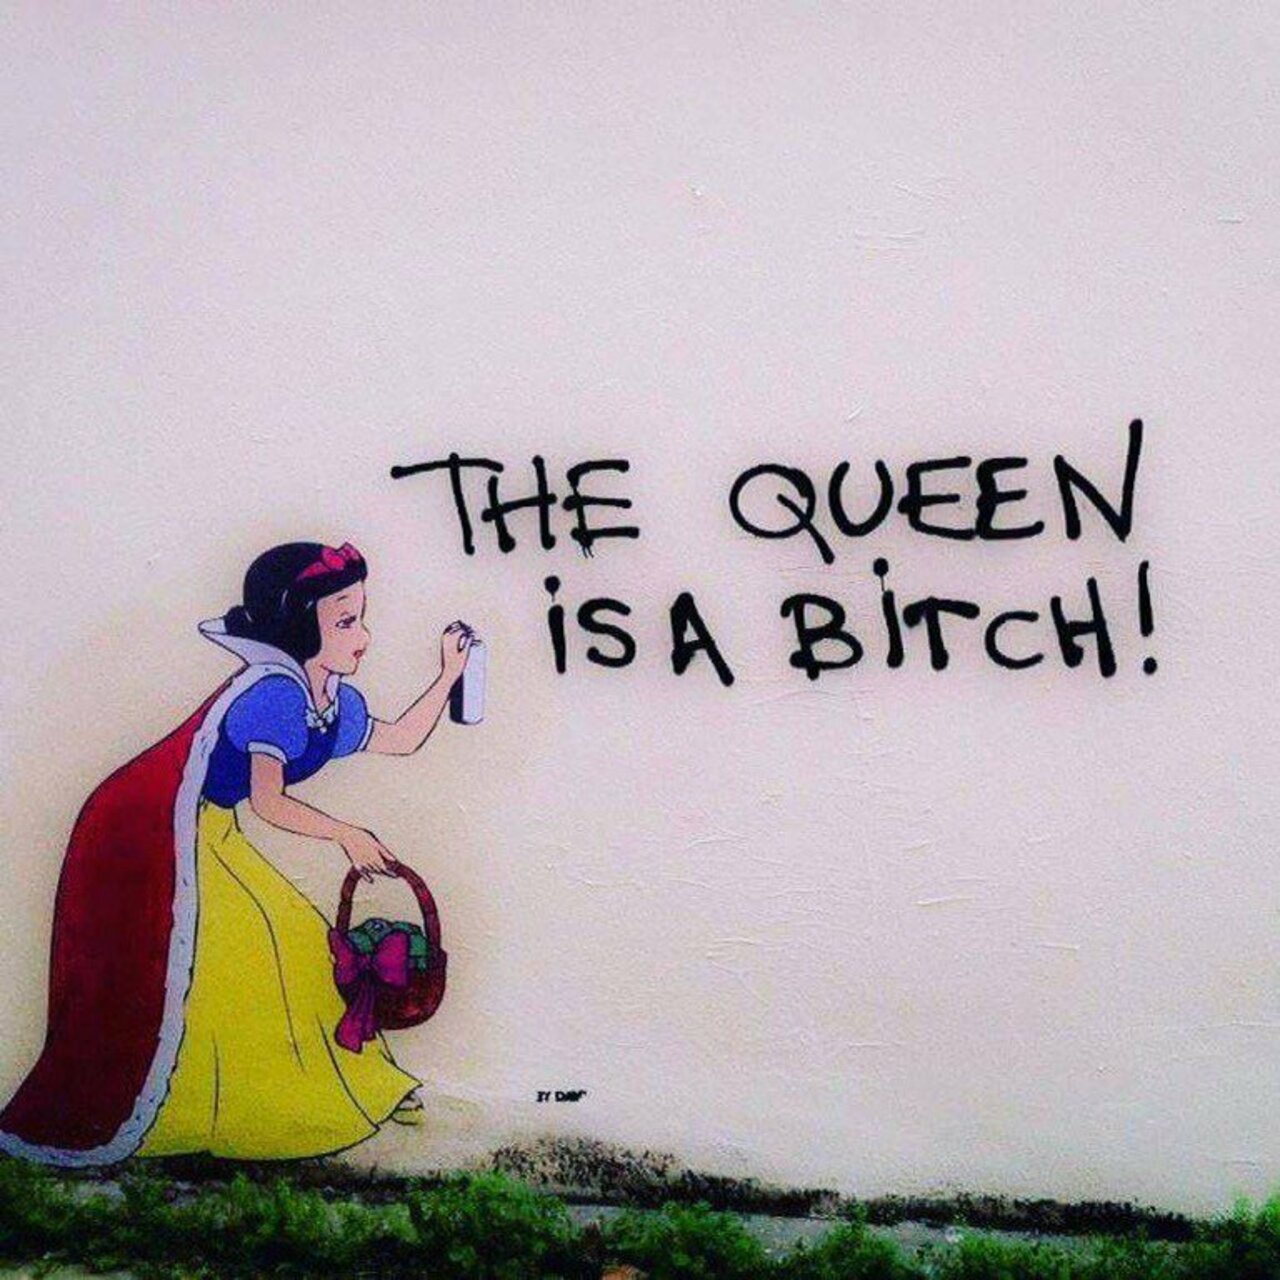 The Queen is a Bitch! – #Creative #Streetart http://beartistbeart.com/2016/09/27/the-queen-is-a-bitch-creative-streetart https://t.co/fUnhjKDOFu